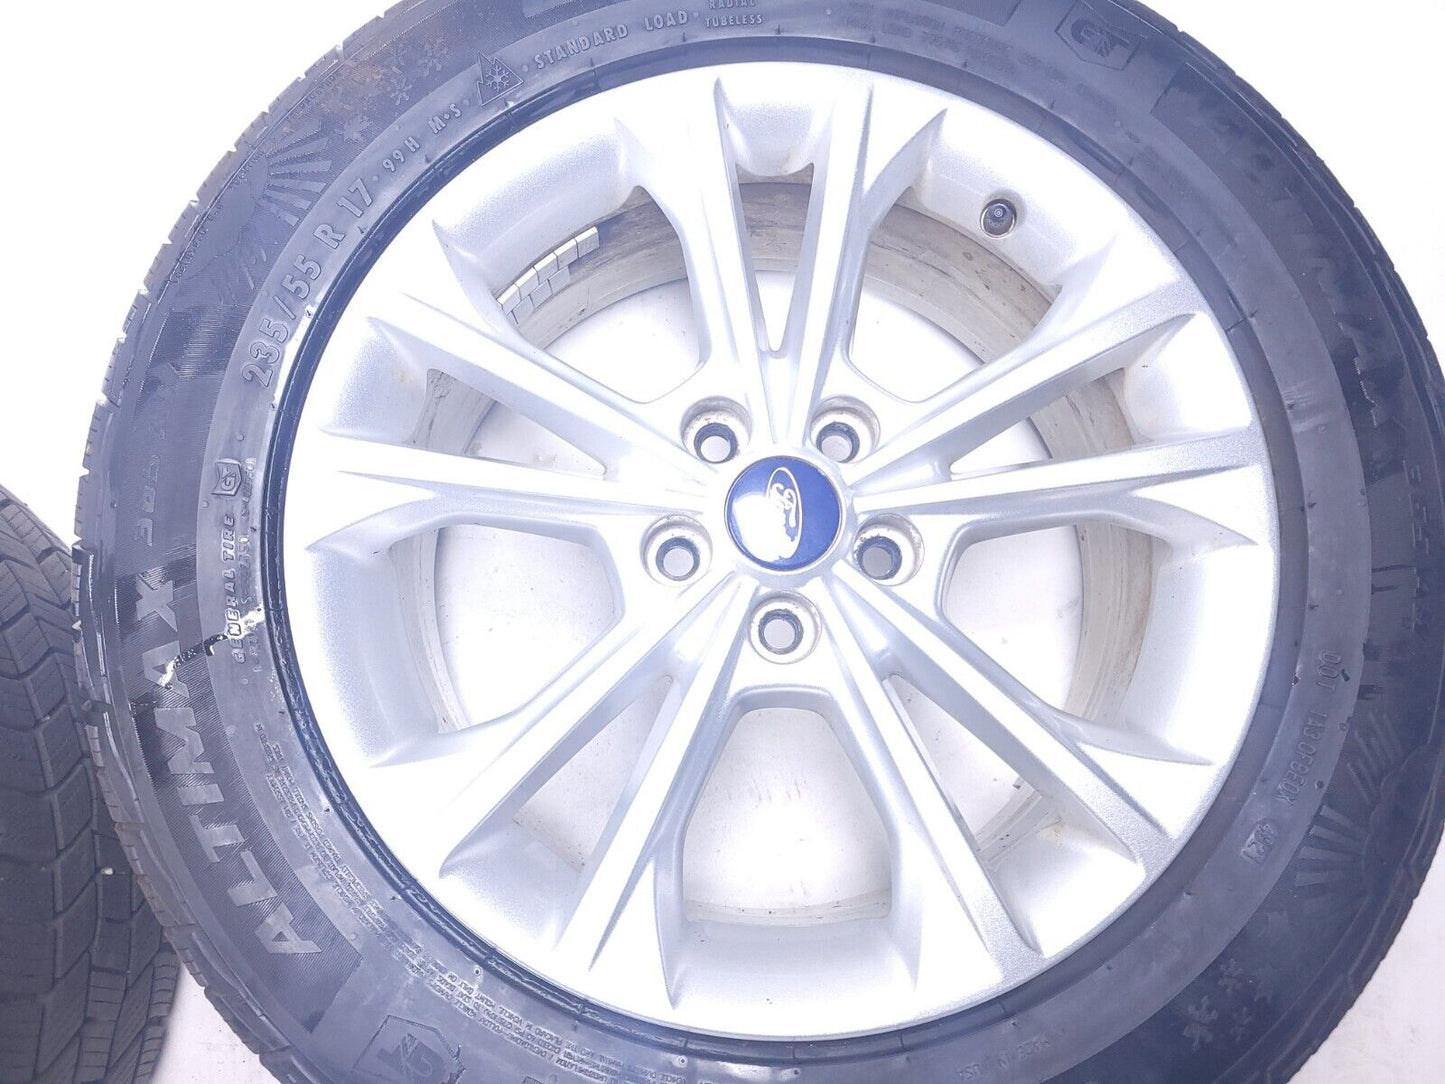 17 18 19 Ford Escape Alloy Wheel Rim 17x7.5 & Tire 235/55 R17 4pcs OEM